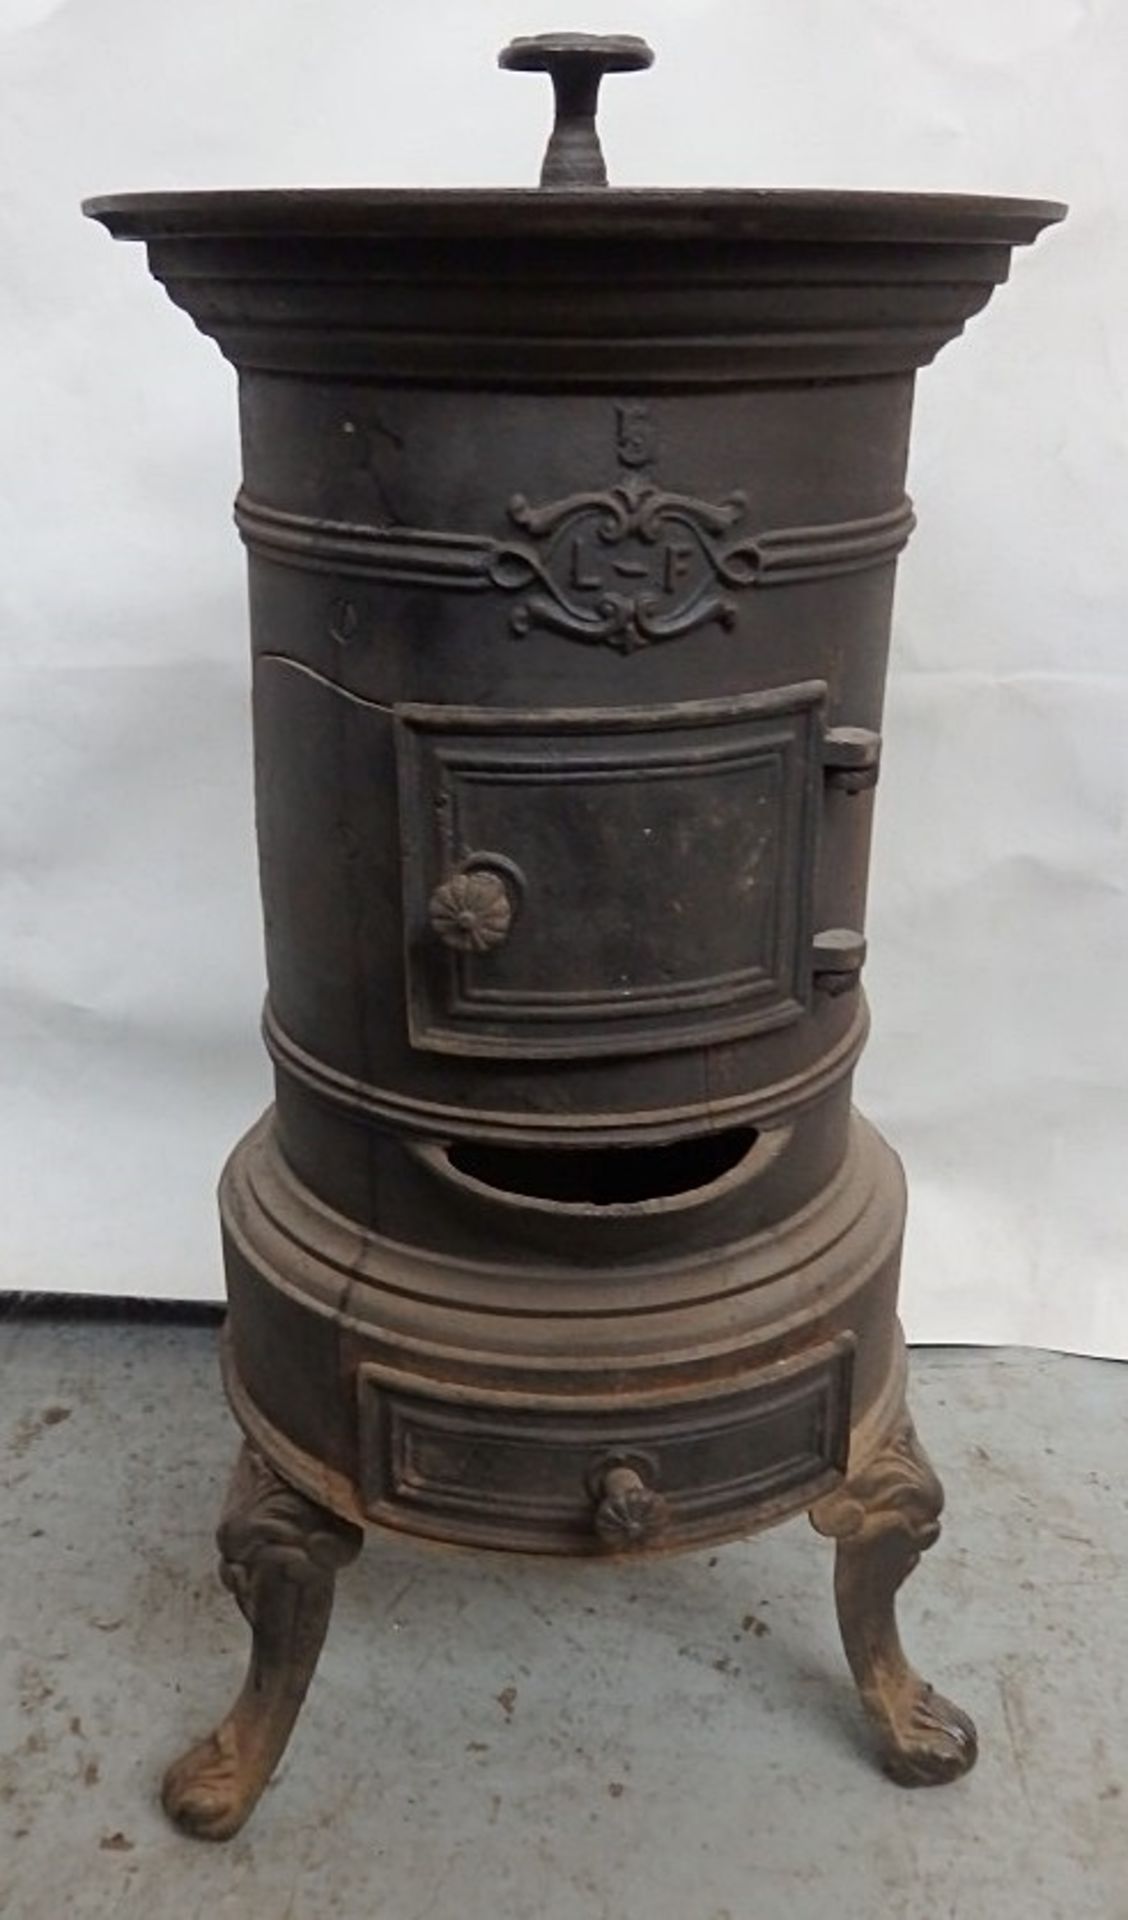 1 x Reclaimed Antique Cast Iron Potbelly Wood Burner / Stove - Dimensions: H61, Diameter 30cm - Ref